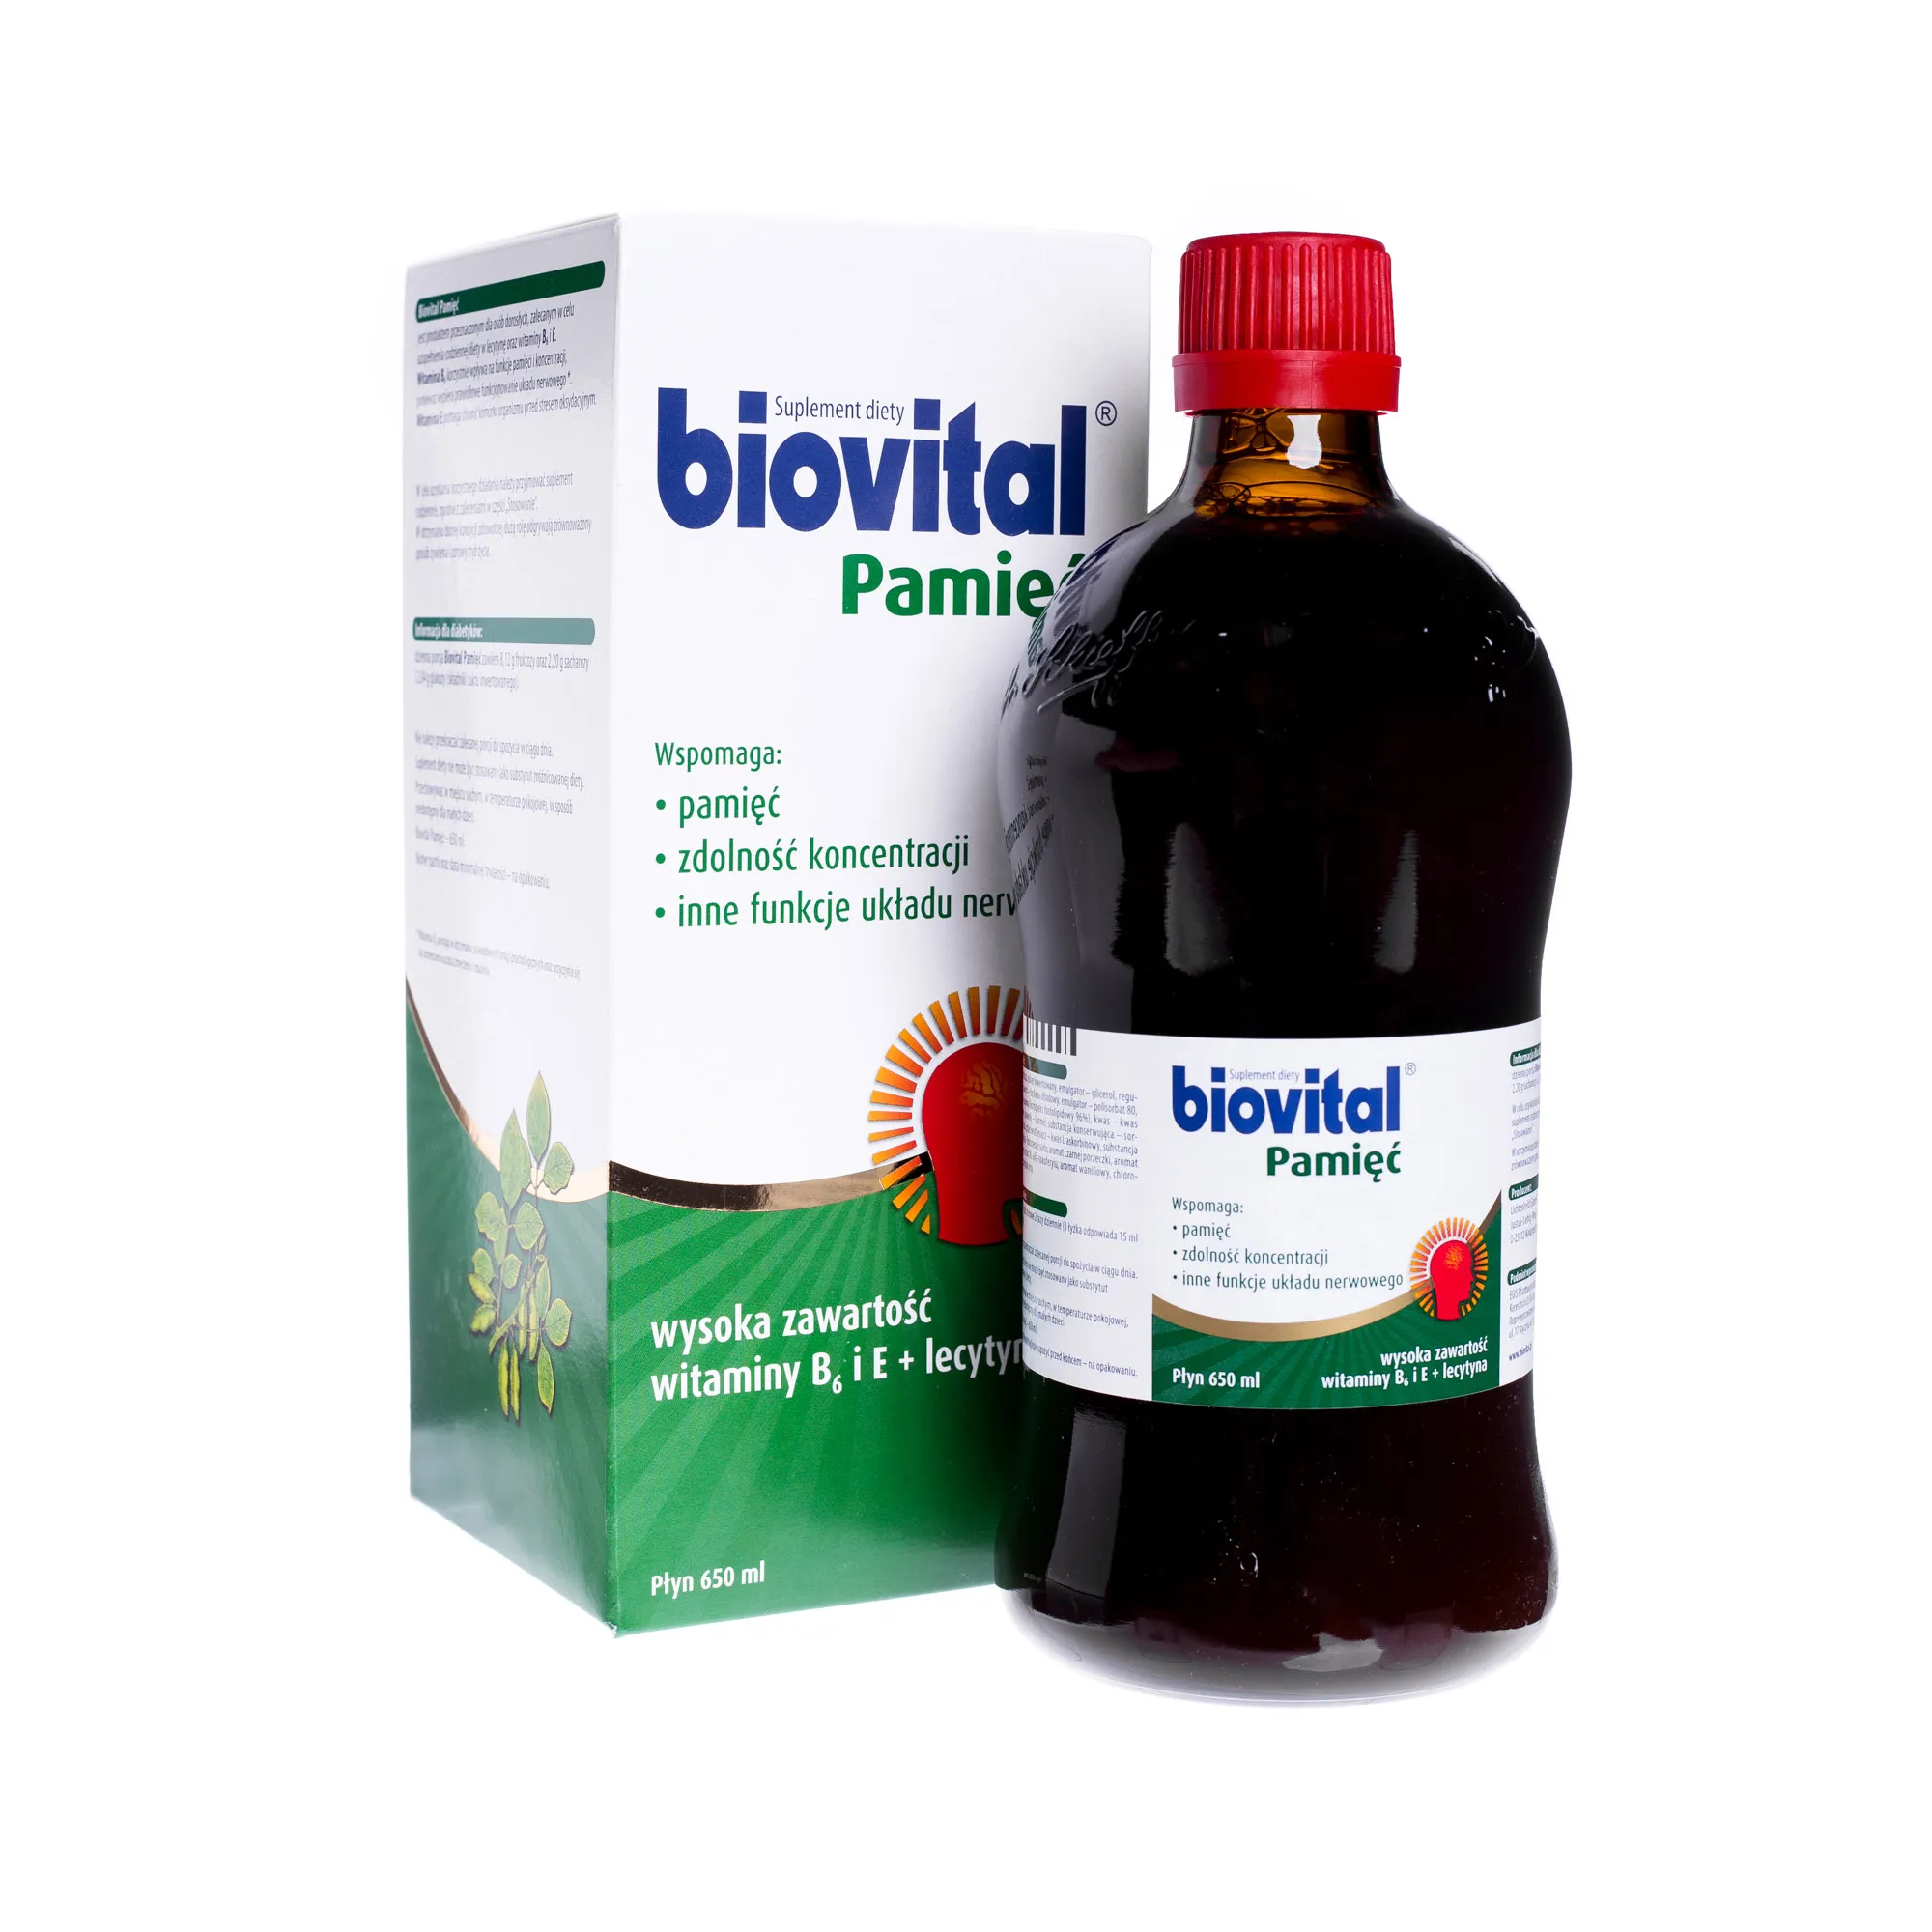 Biovital Pamięć, suplement diety, płyn, 650 ml